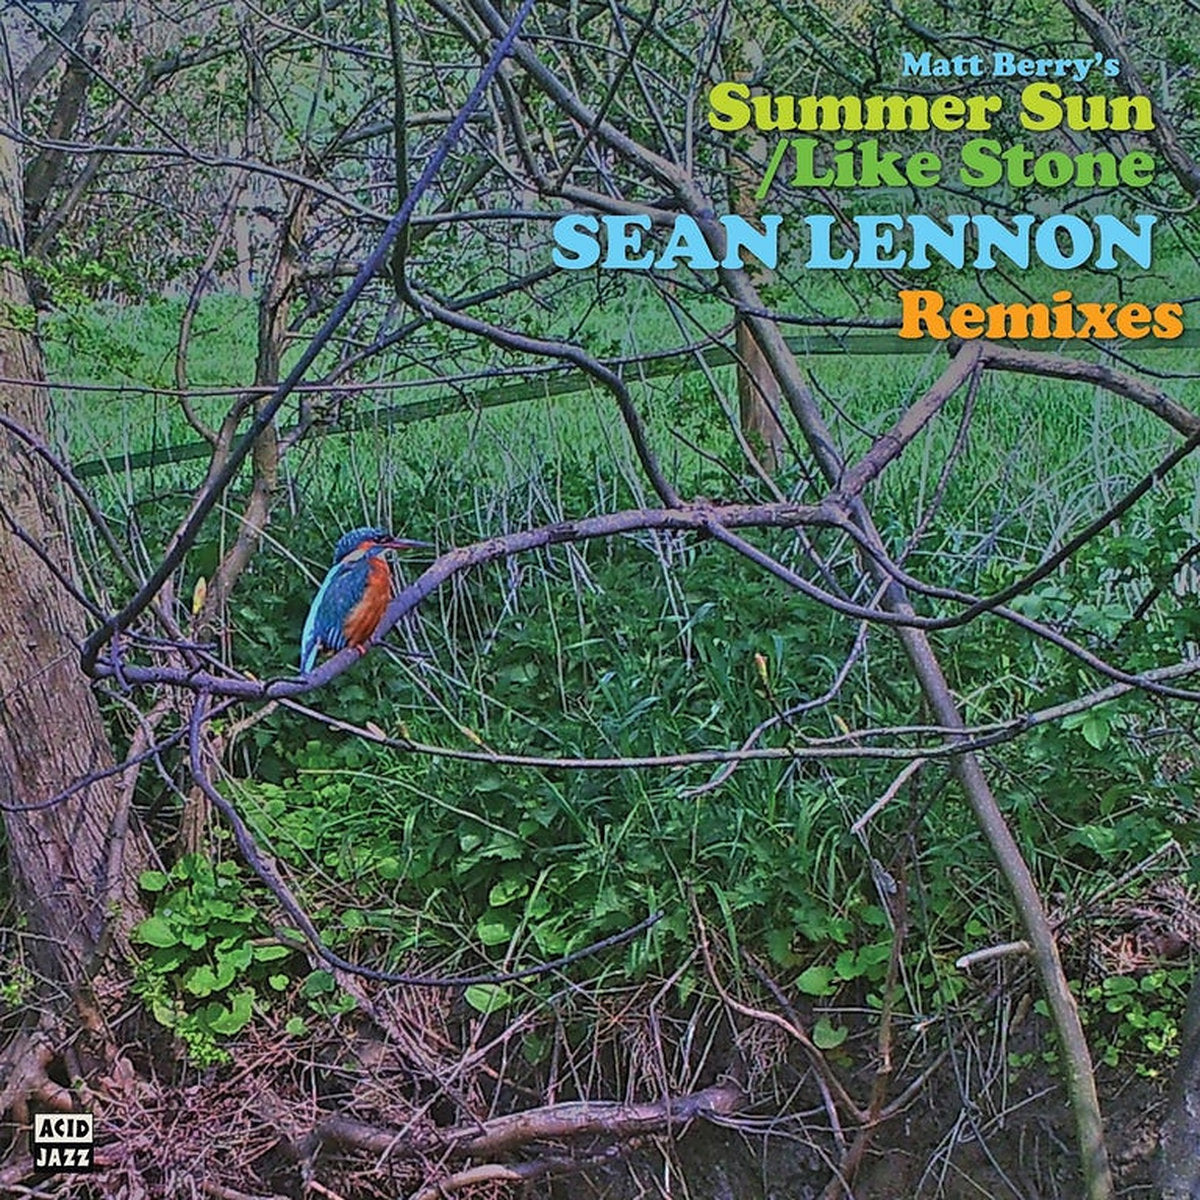 Matt Berry - Summer Sun / Like Stone: Sean Lennon Remixes